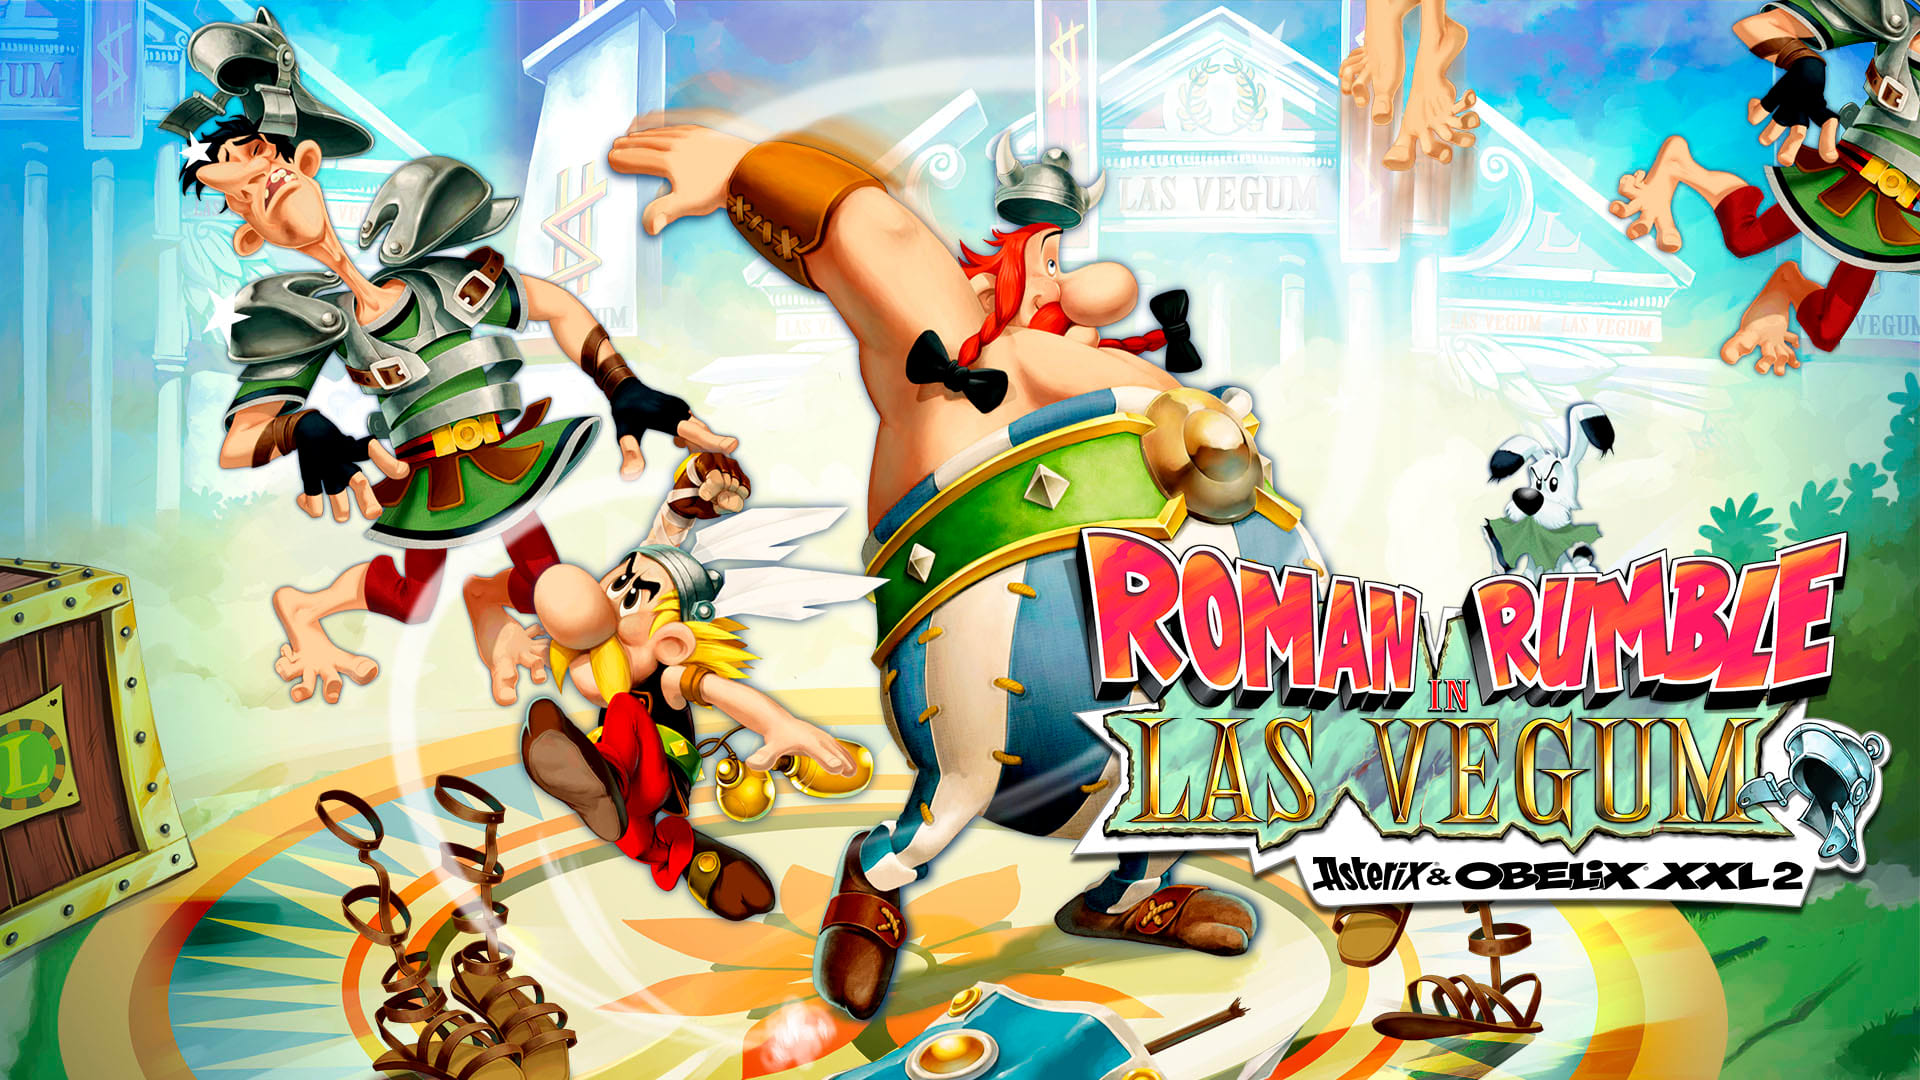 Roman Rumble in Las Vegum - Asterix & Obelix XXL 2 1